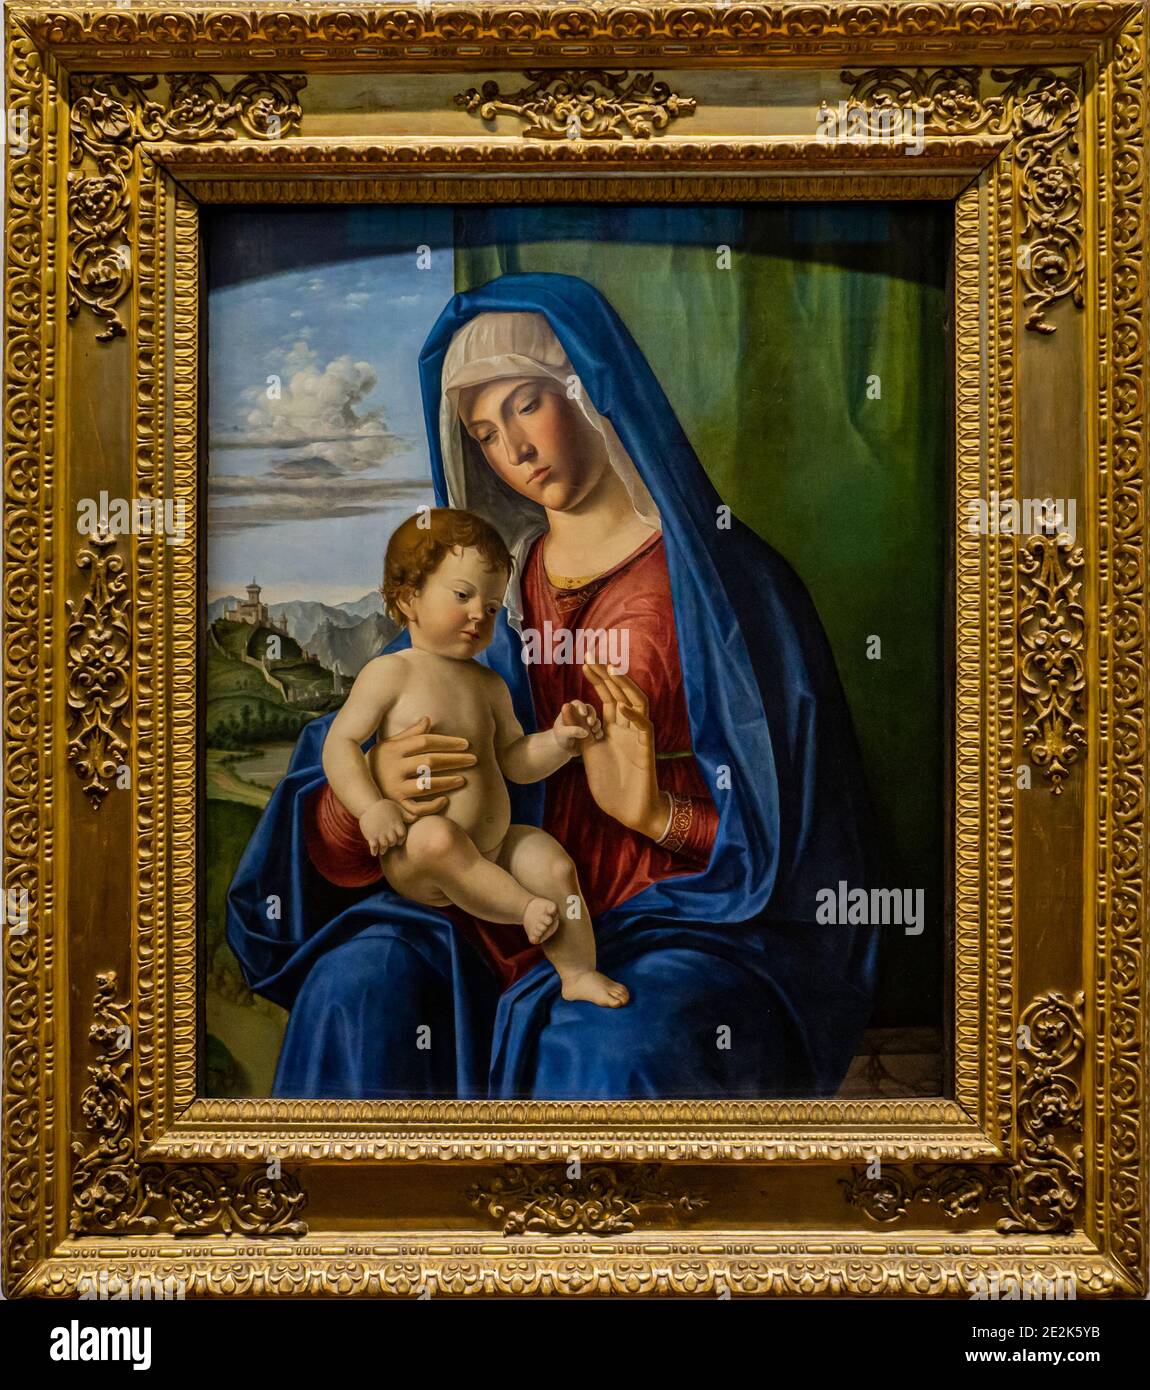 Painting Madonna and Child by Cima da Conegliano from 1504 at Uffizi Gallery Stock Photo